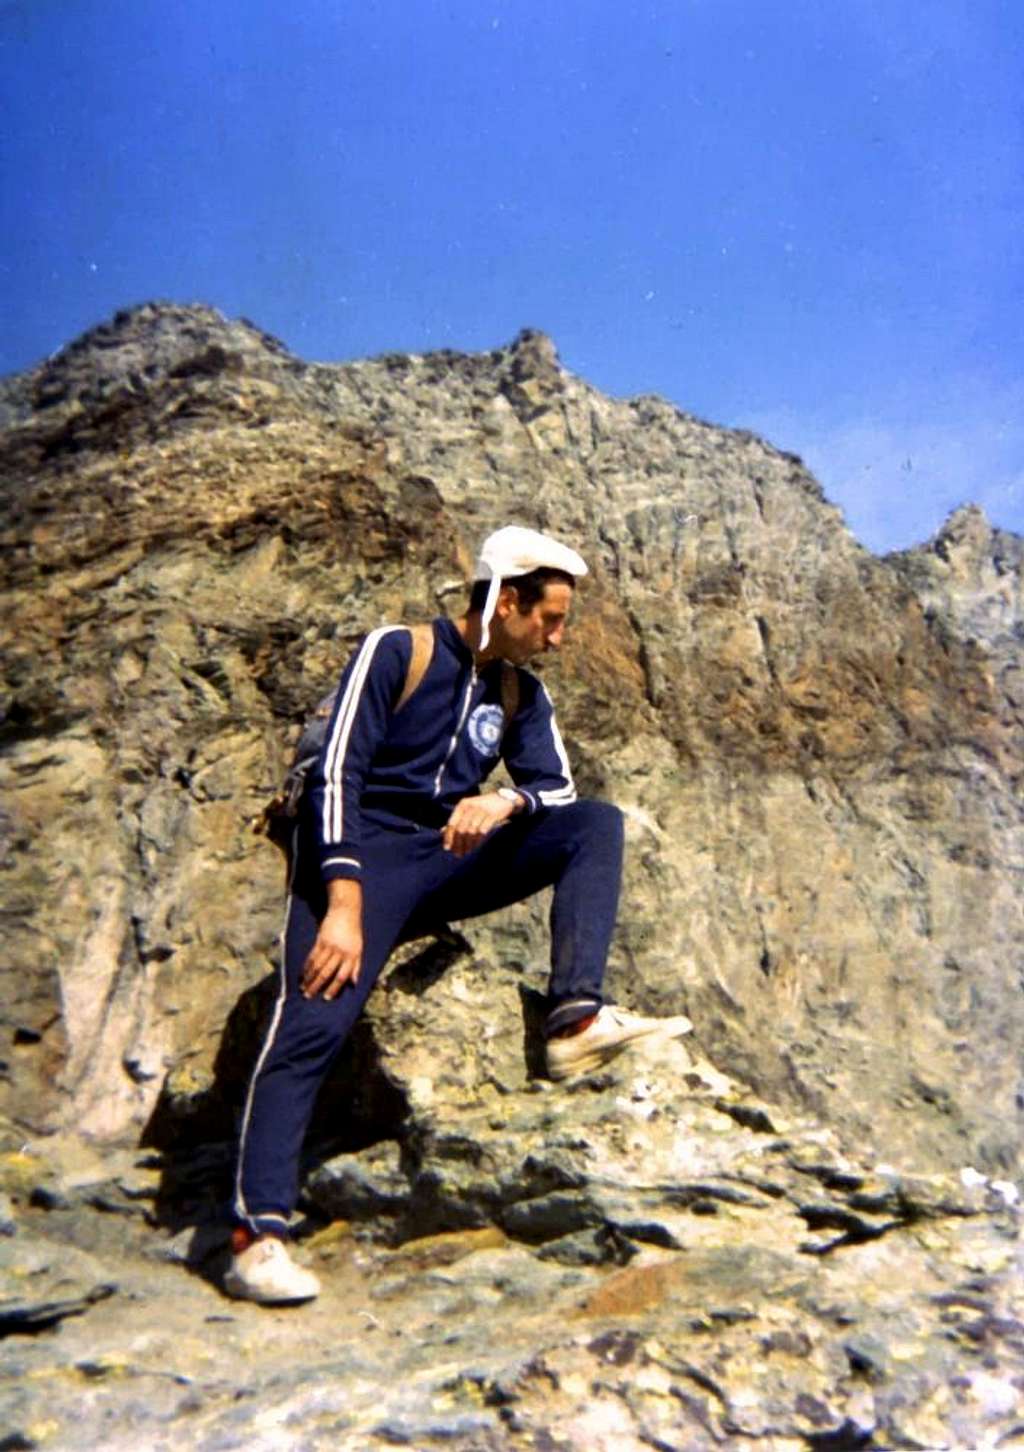 Great Tournalin (3379m) ascent by South Ridge & <B><FONT COLOR =BLUE>DOUBLE TRAVERSE</FONT> on 1974</B>  